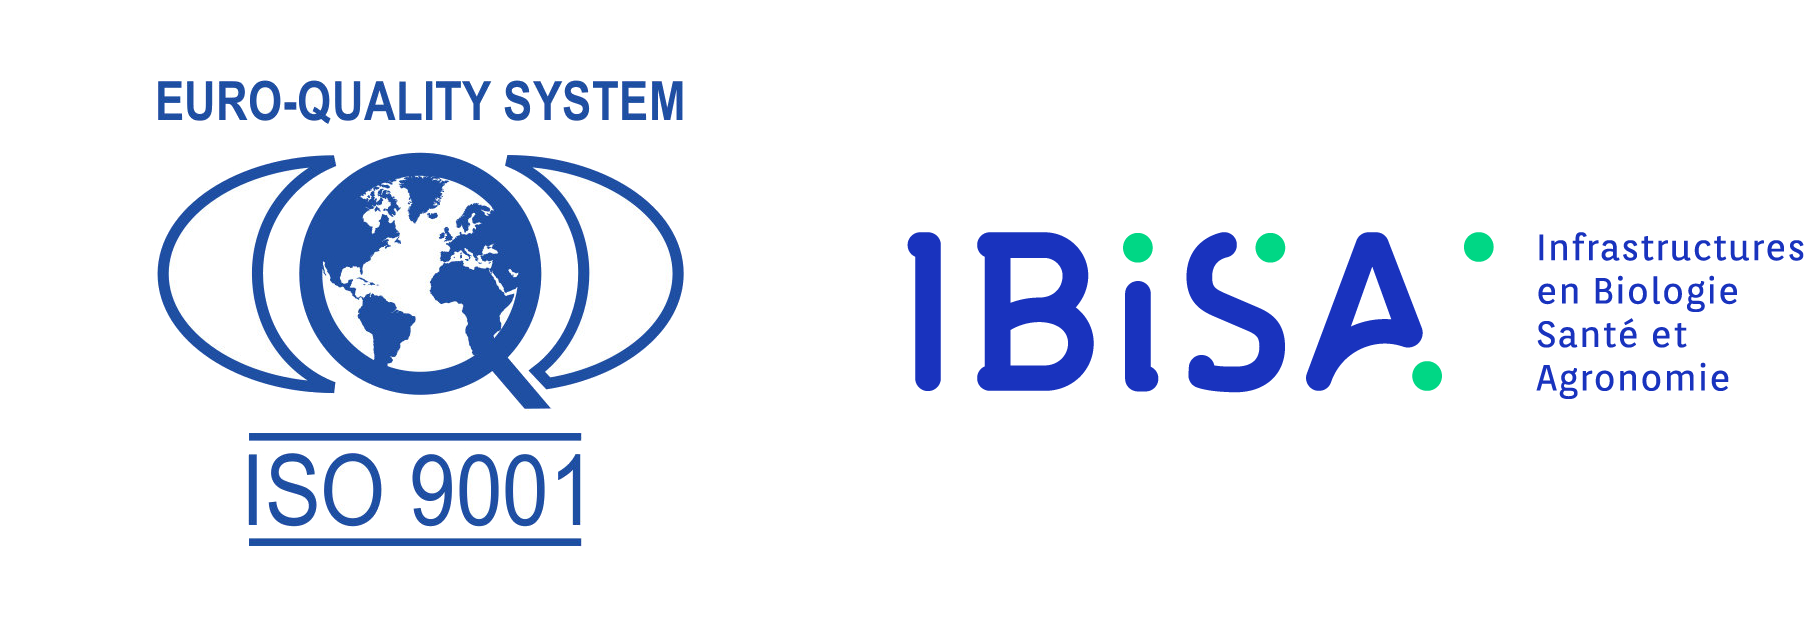 Logo Euroquality plus IBiSA